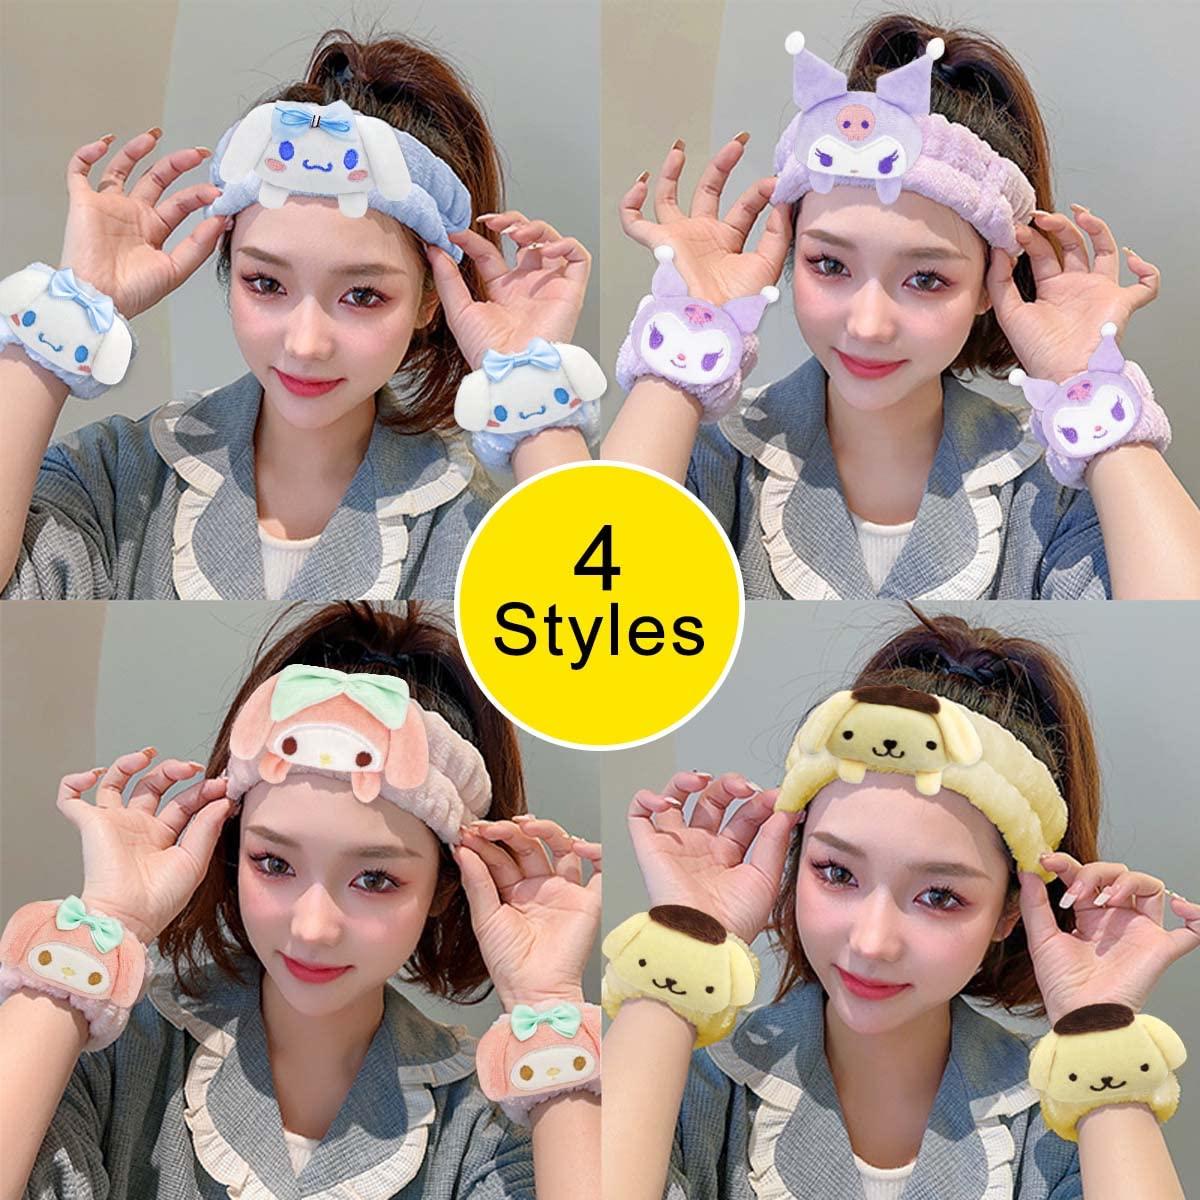 Kugiter Cute Spa Headband and Wristband Set for Face Washing